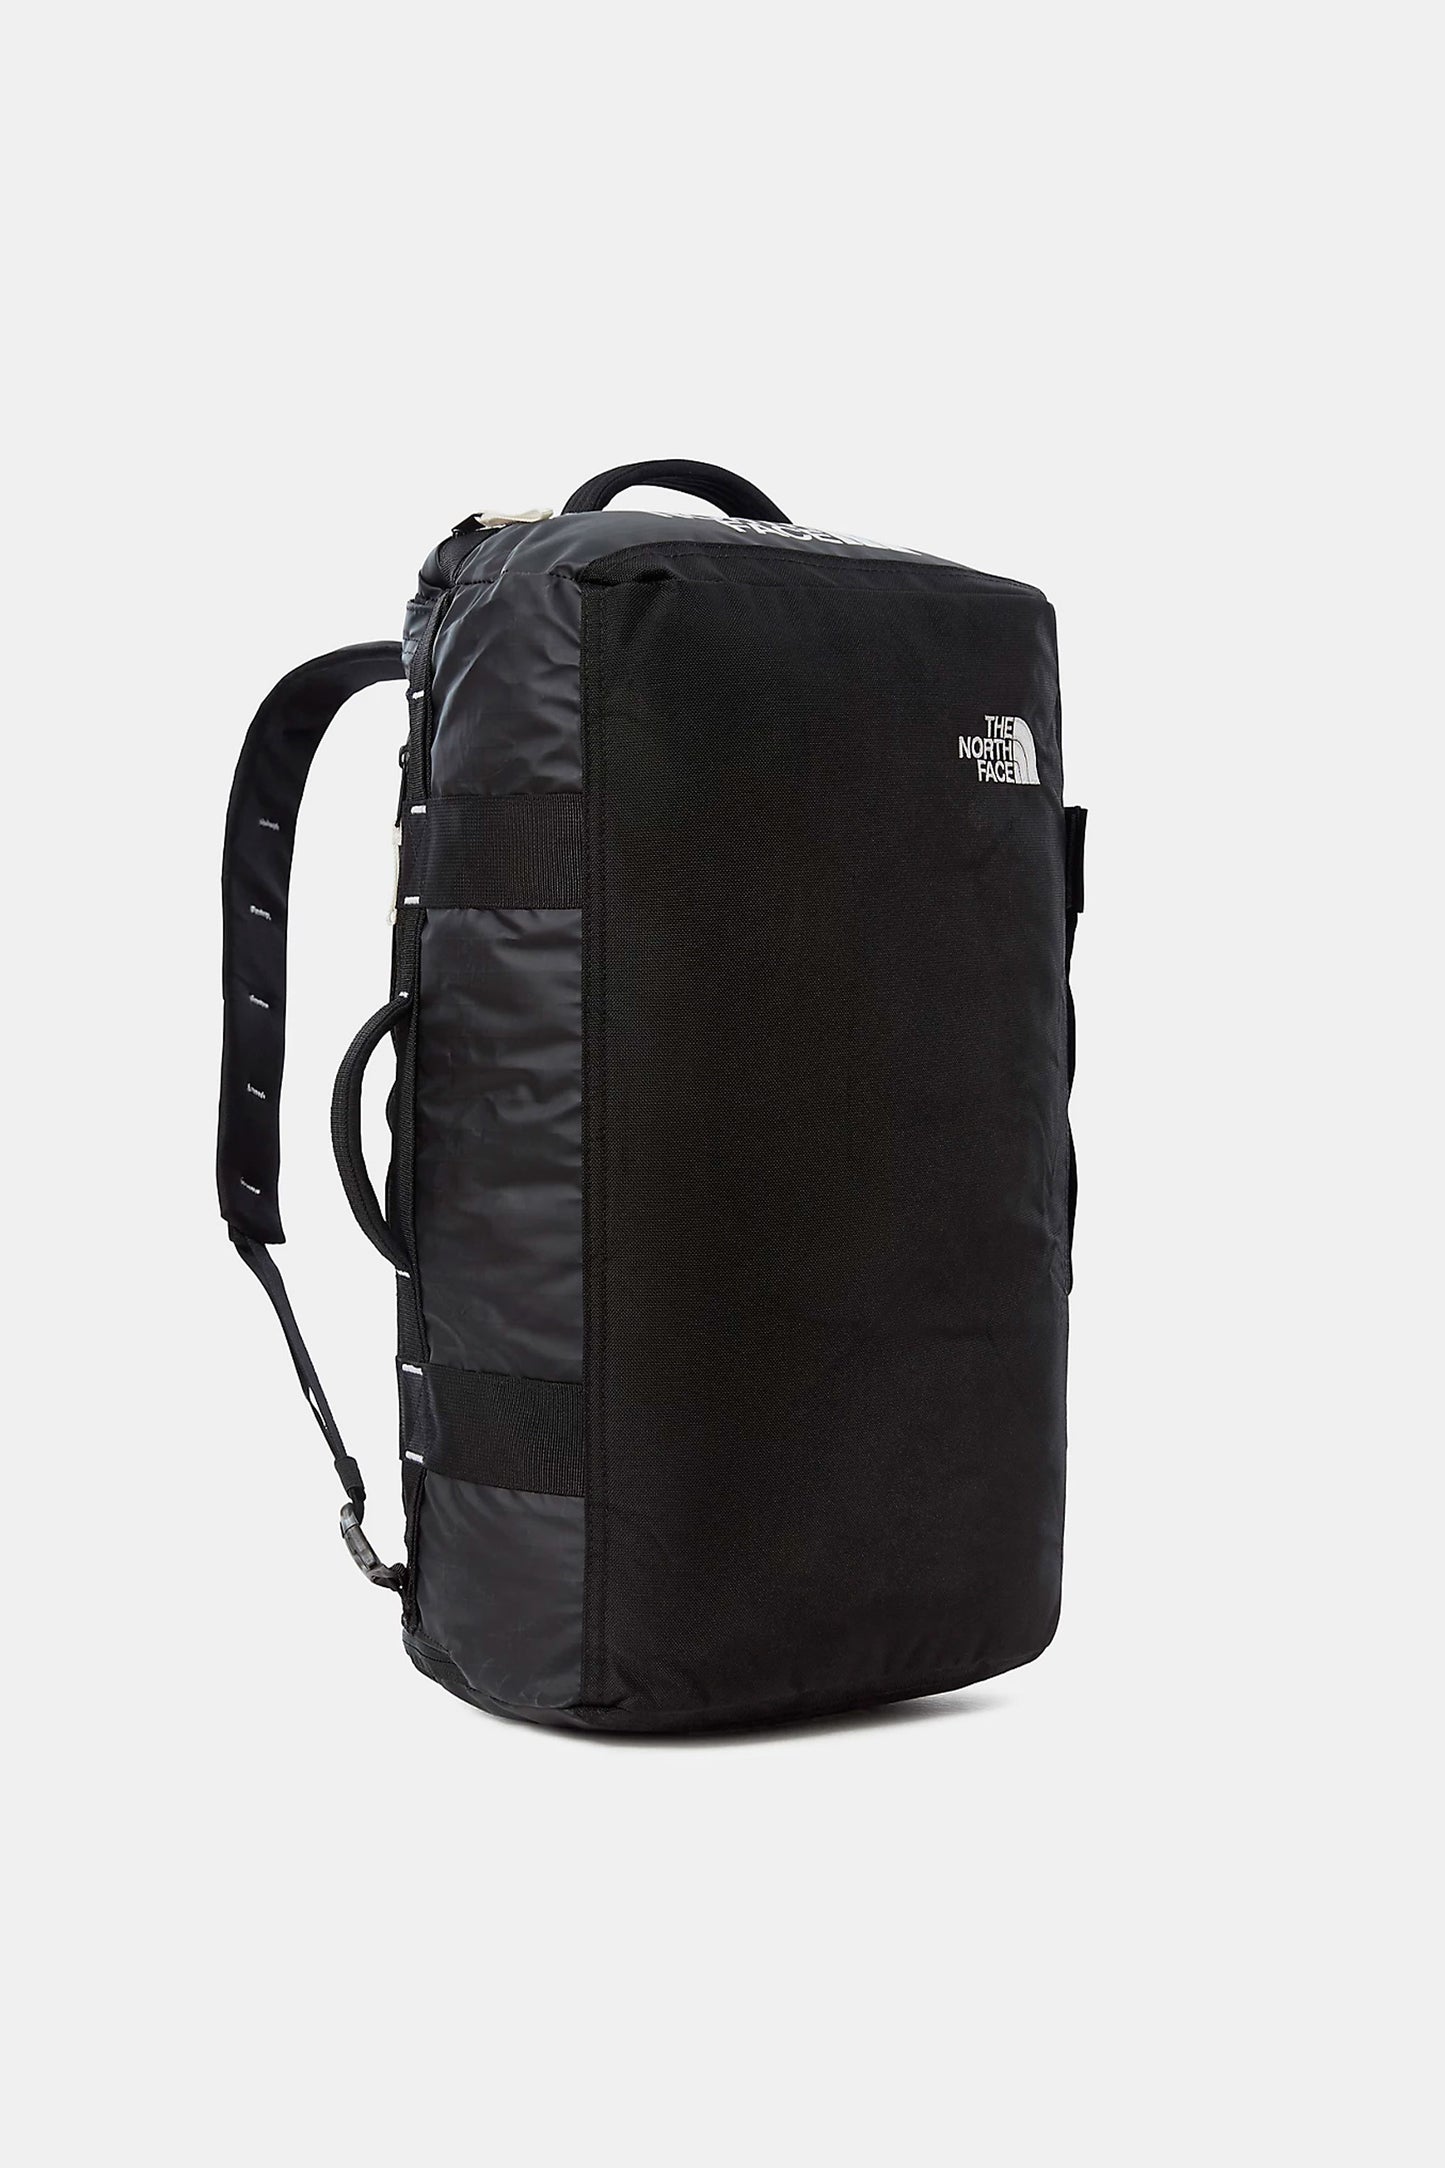 Pukas-Surf-Shop-The-North-Face-backpack-base-camp-duffel-voyager-32l-black